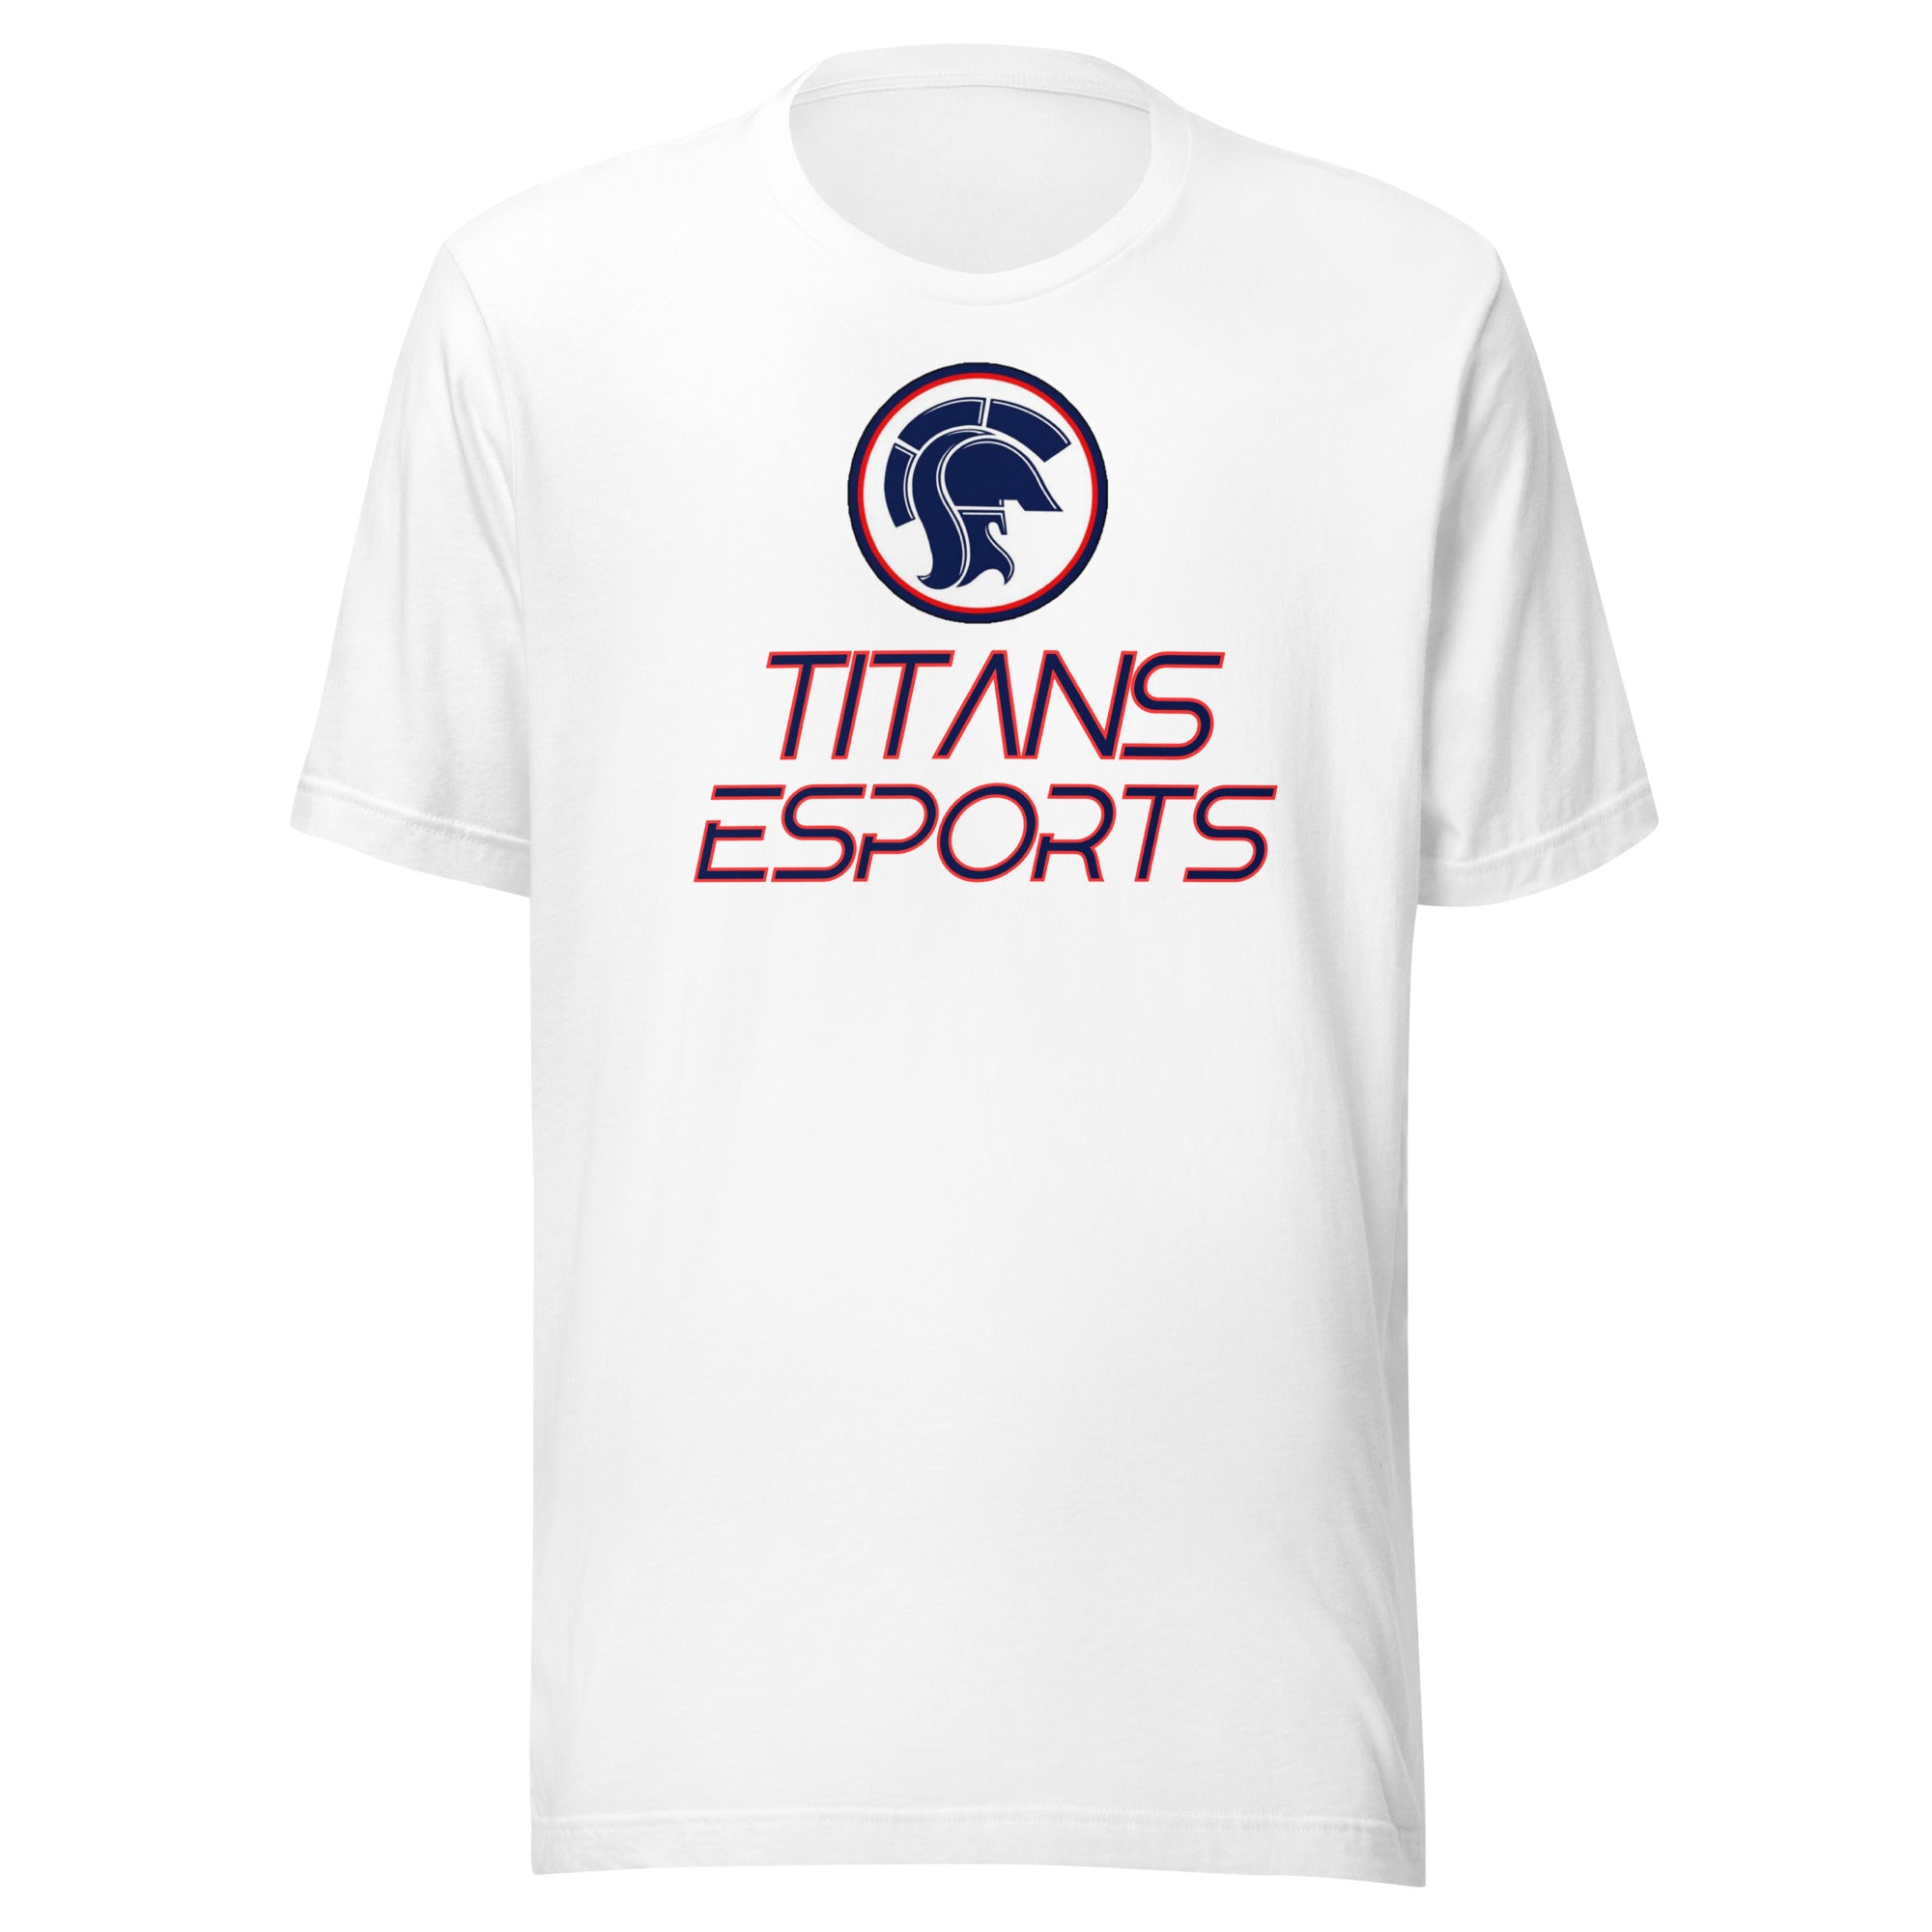 Titans Esports T Shirt